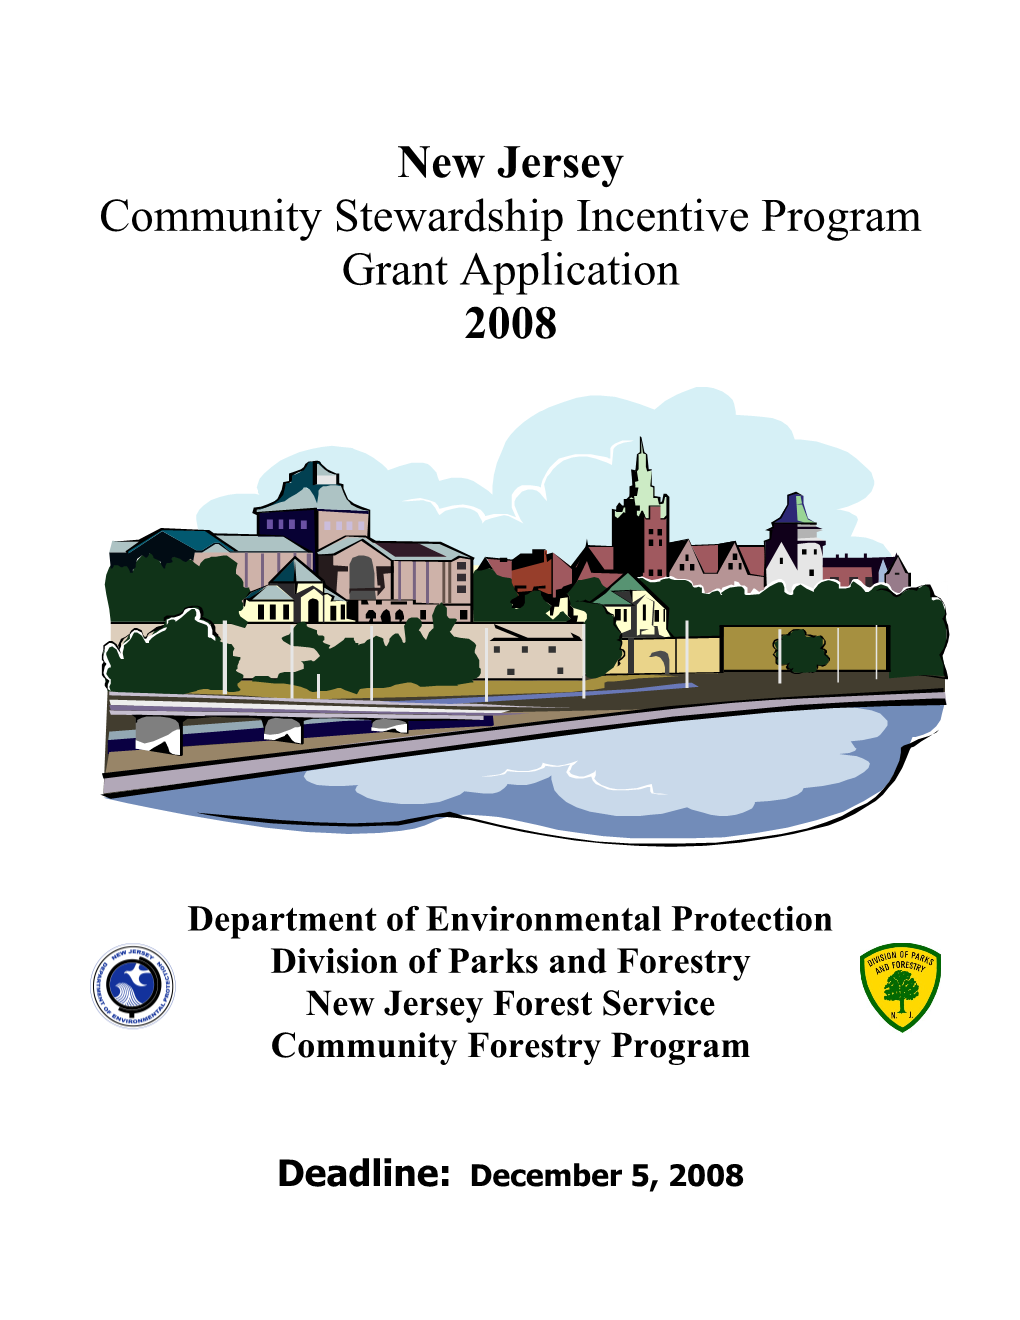 Community Stewardship Incentive Program